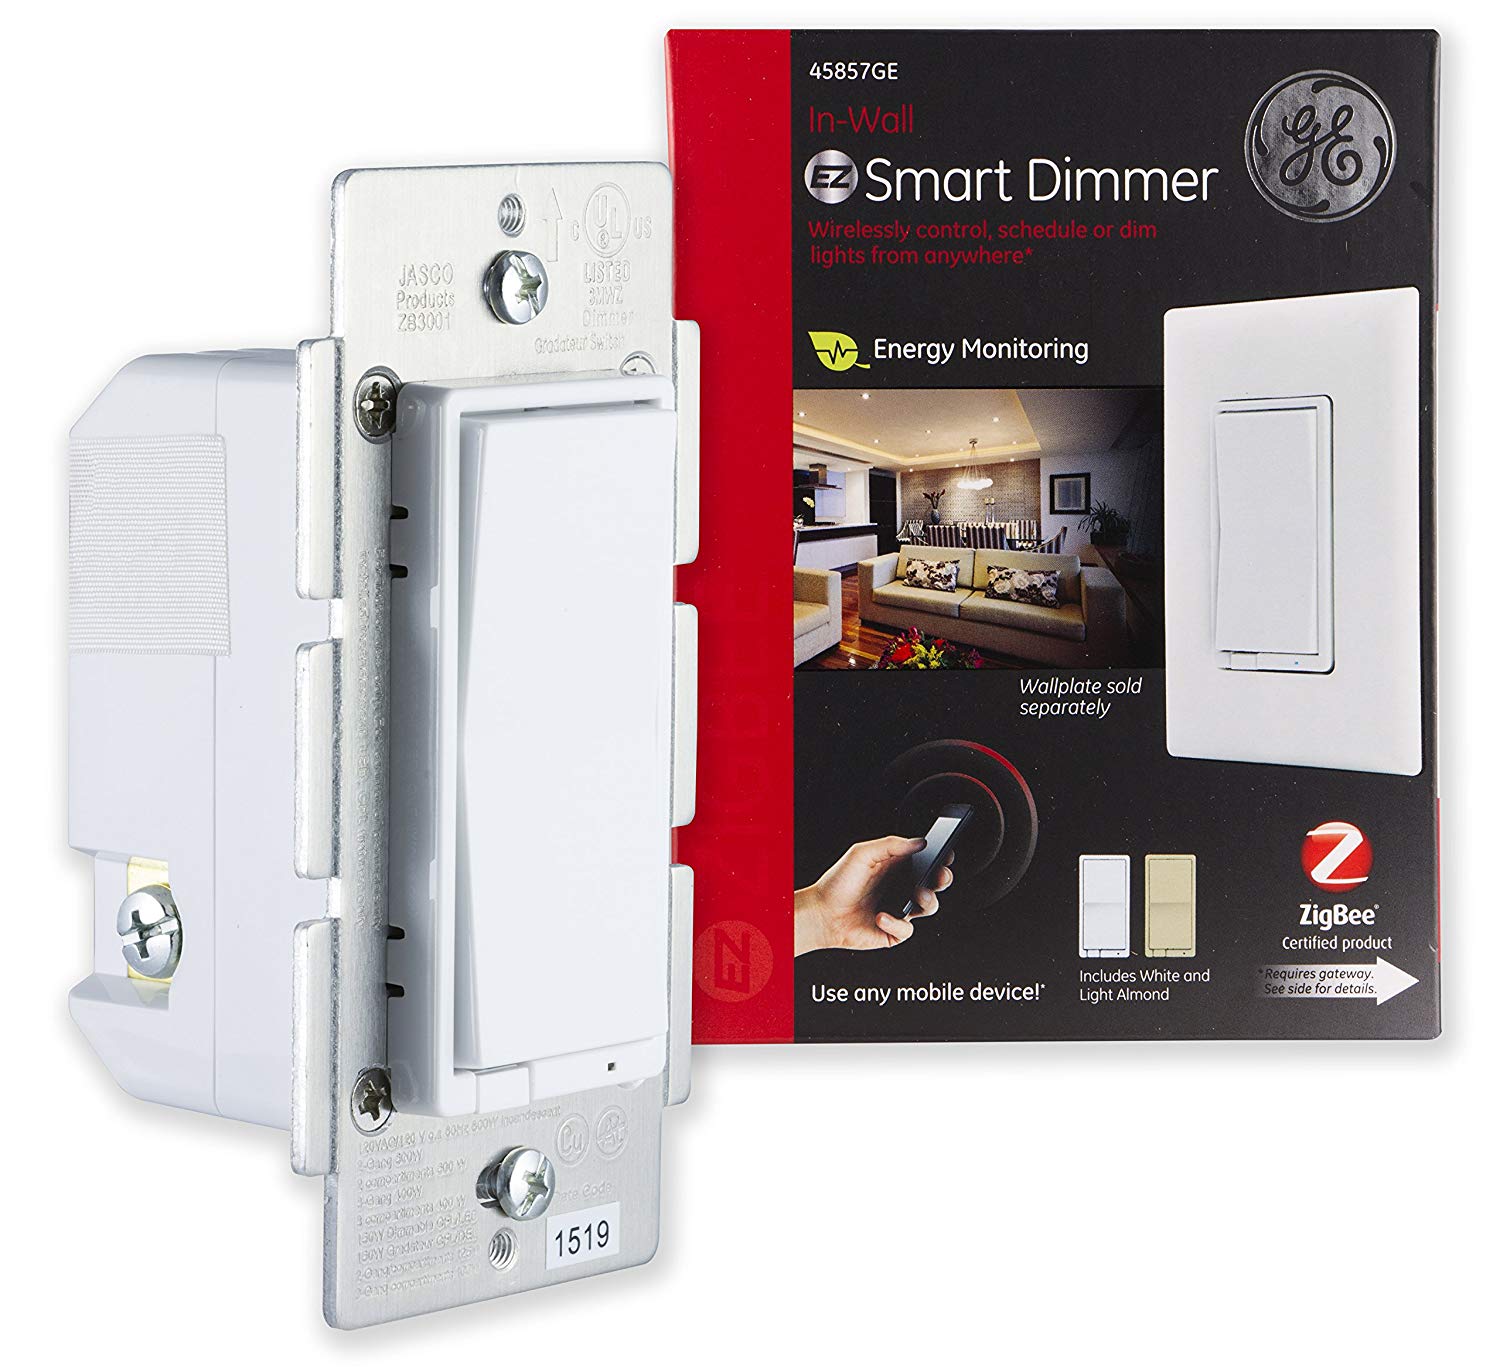 GE ZigBee In-Wall Smart Lighting Dimmer, Hub Required, 45857GE - image 1 of 8